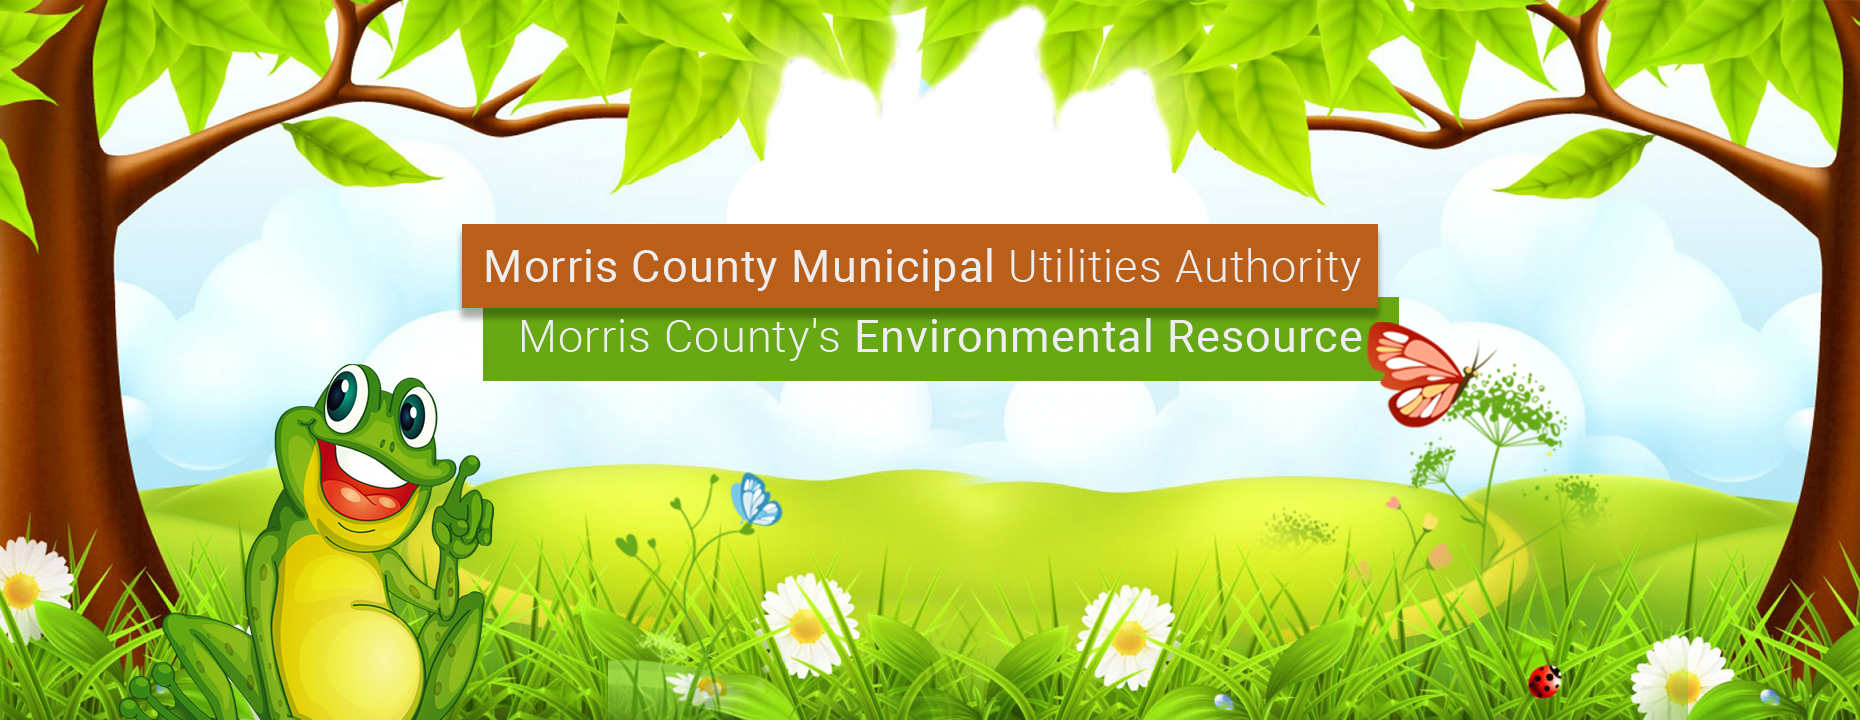 Morris County's Environmental Resource Banner